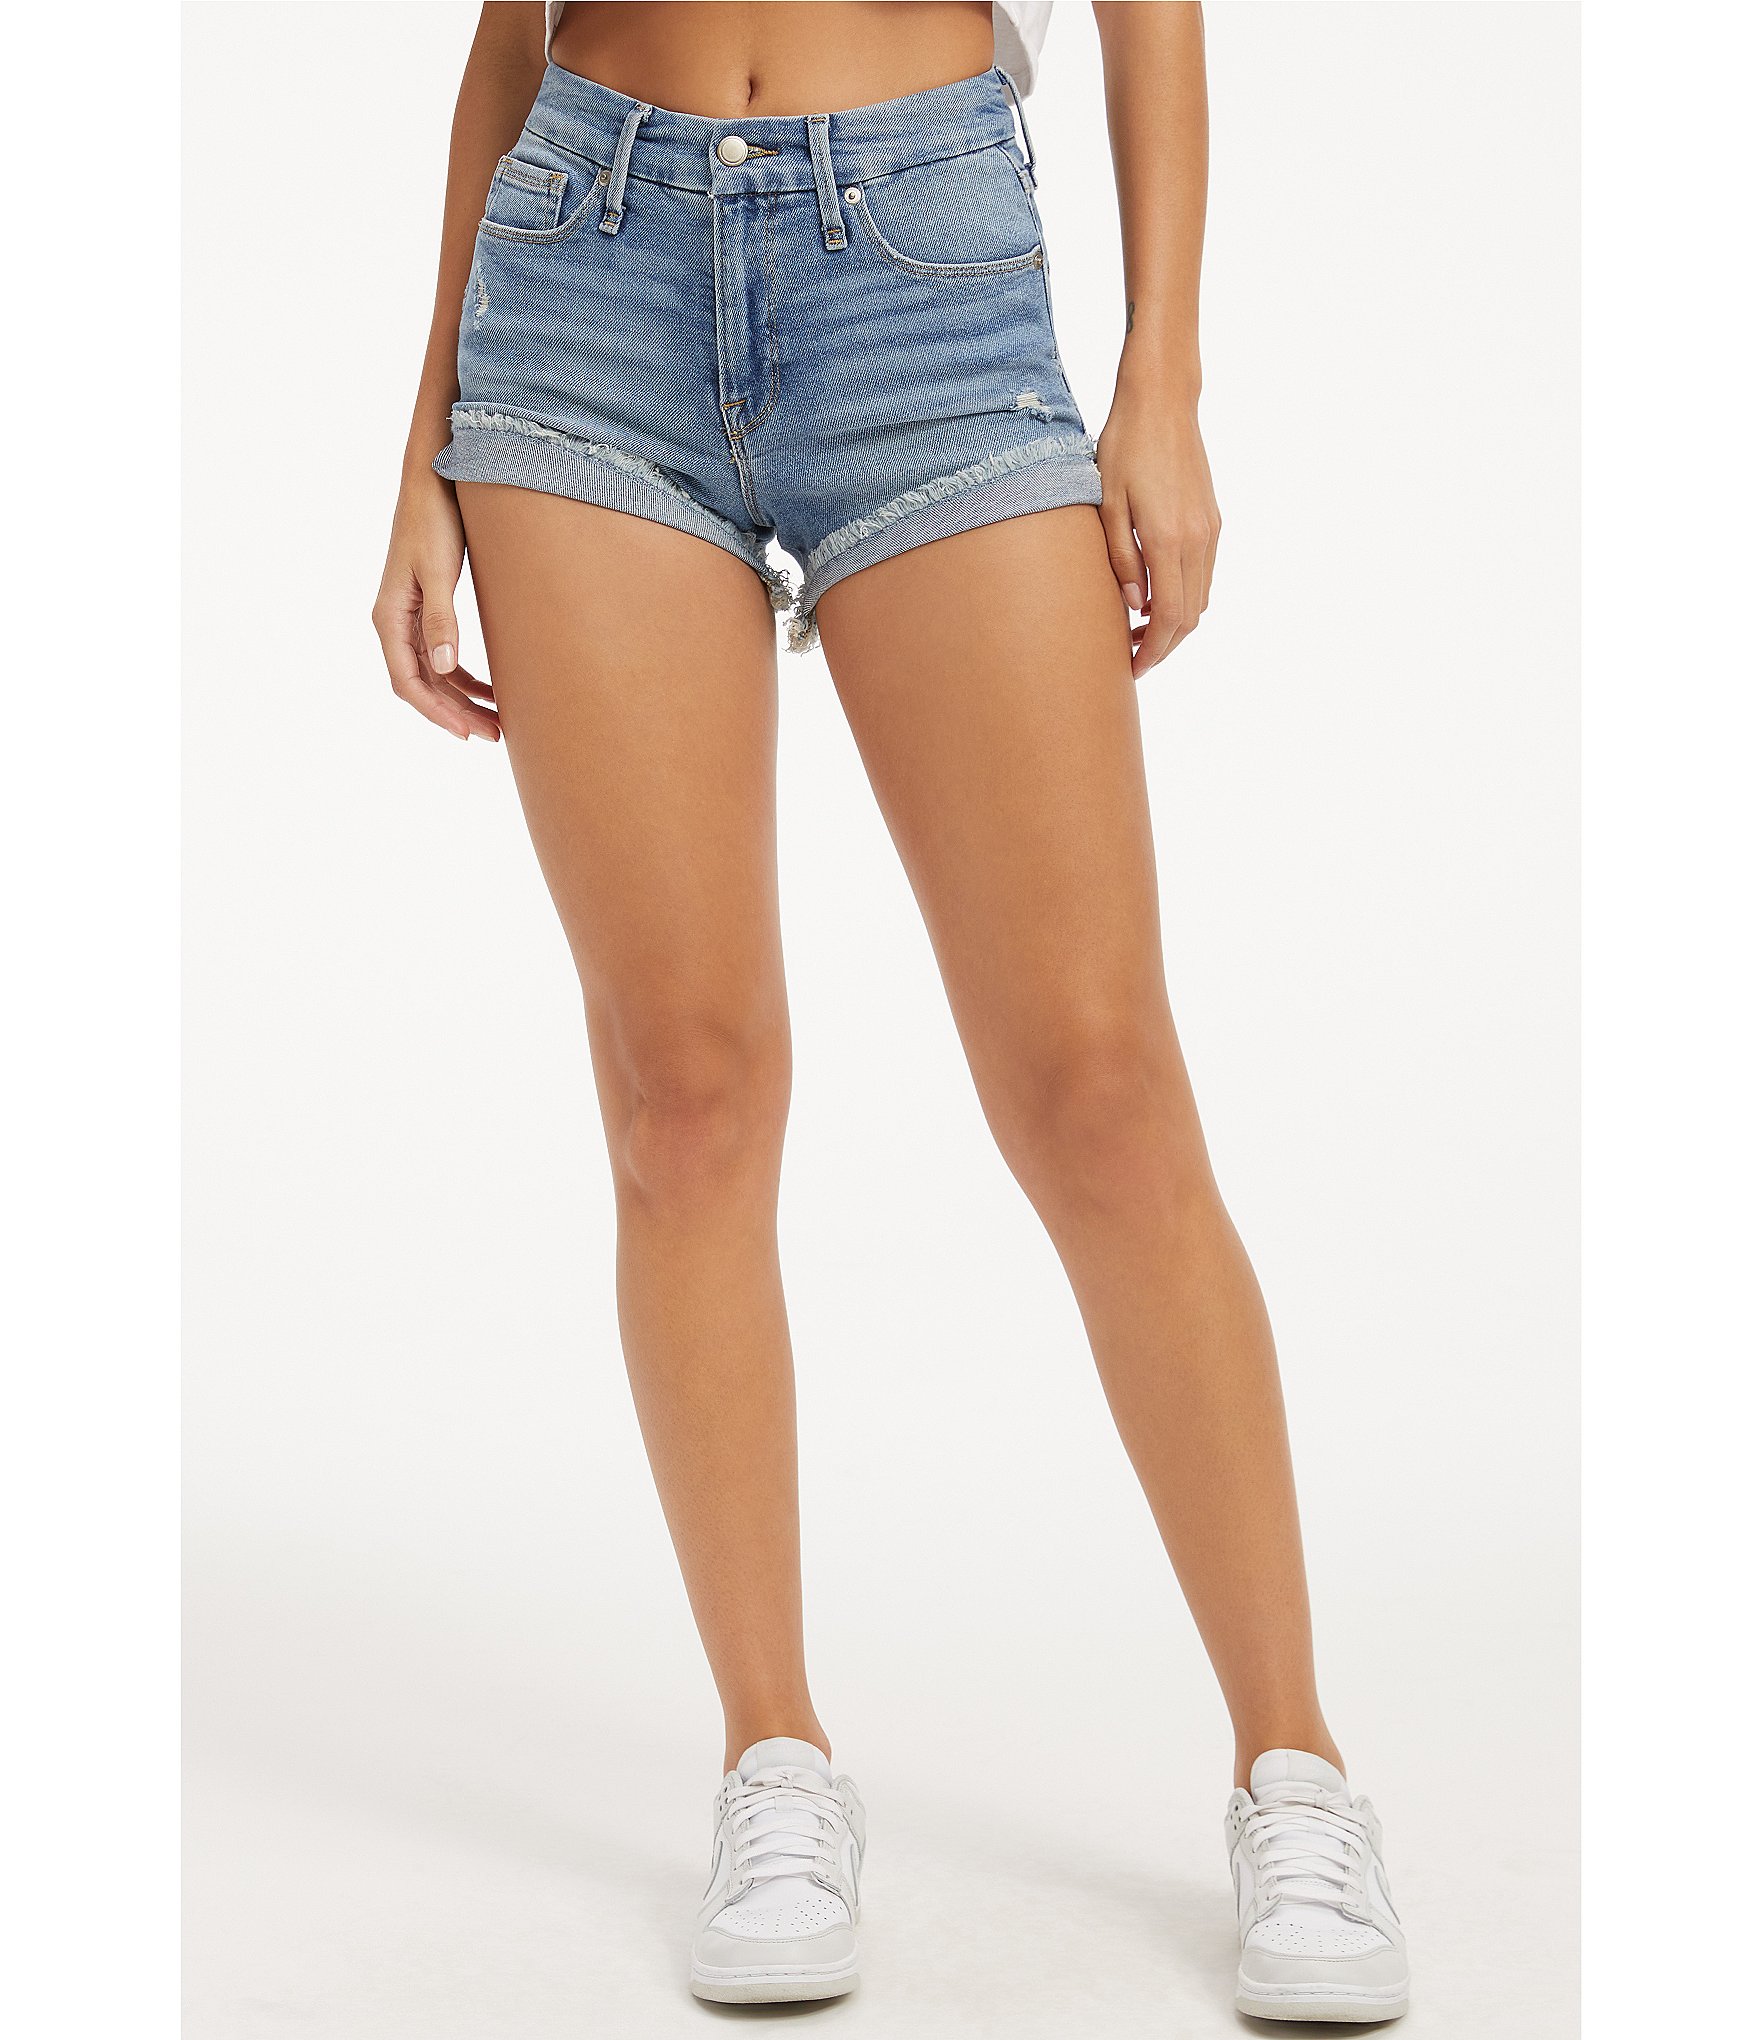 Buy KISSMODA Women's Casual Denim Shorts Mid Length Raw Hem Ripped Jeans  Short Pants at Amazon.in